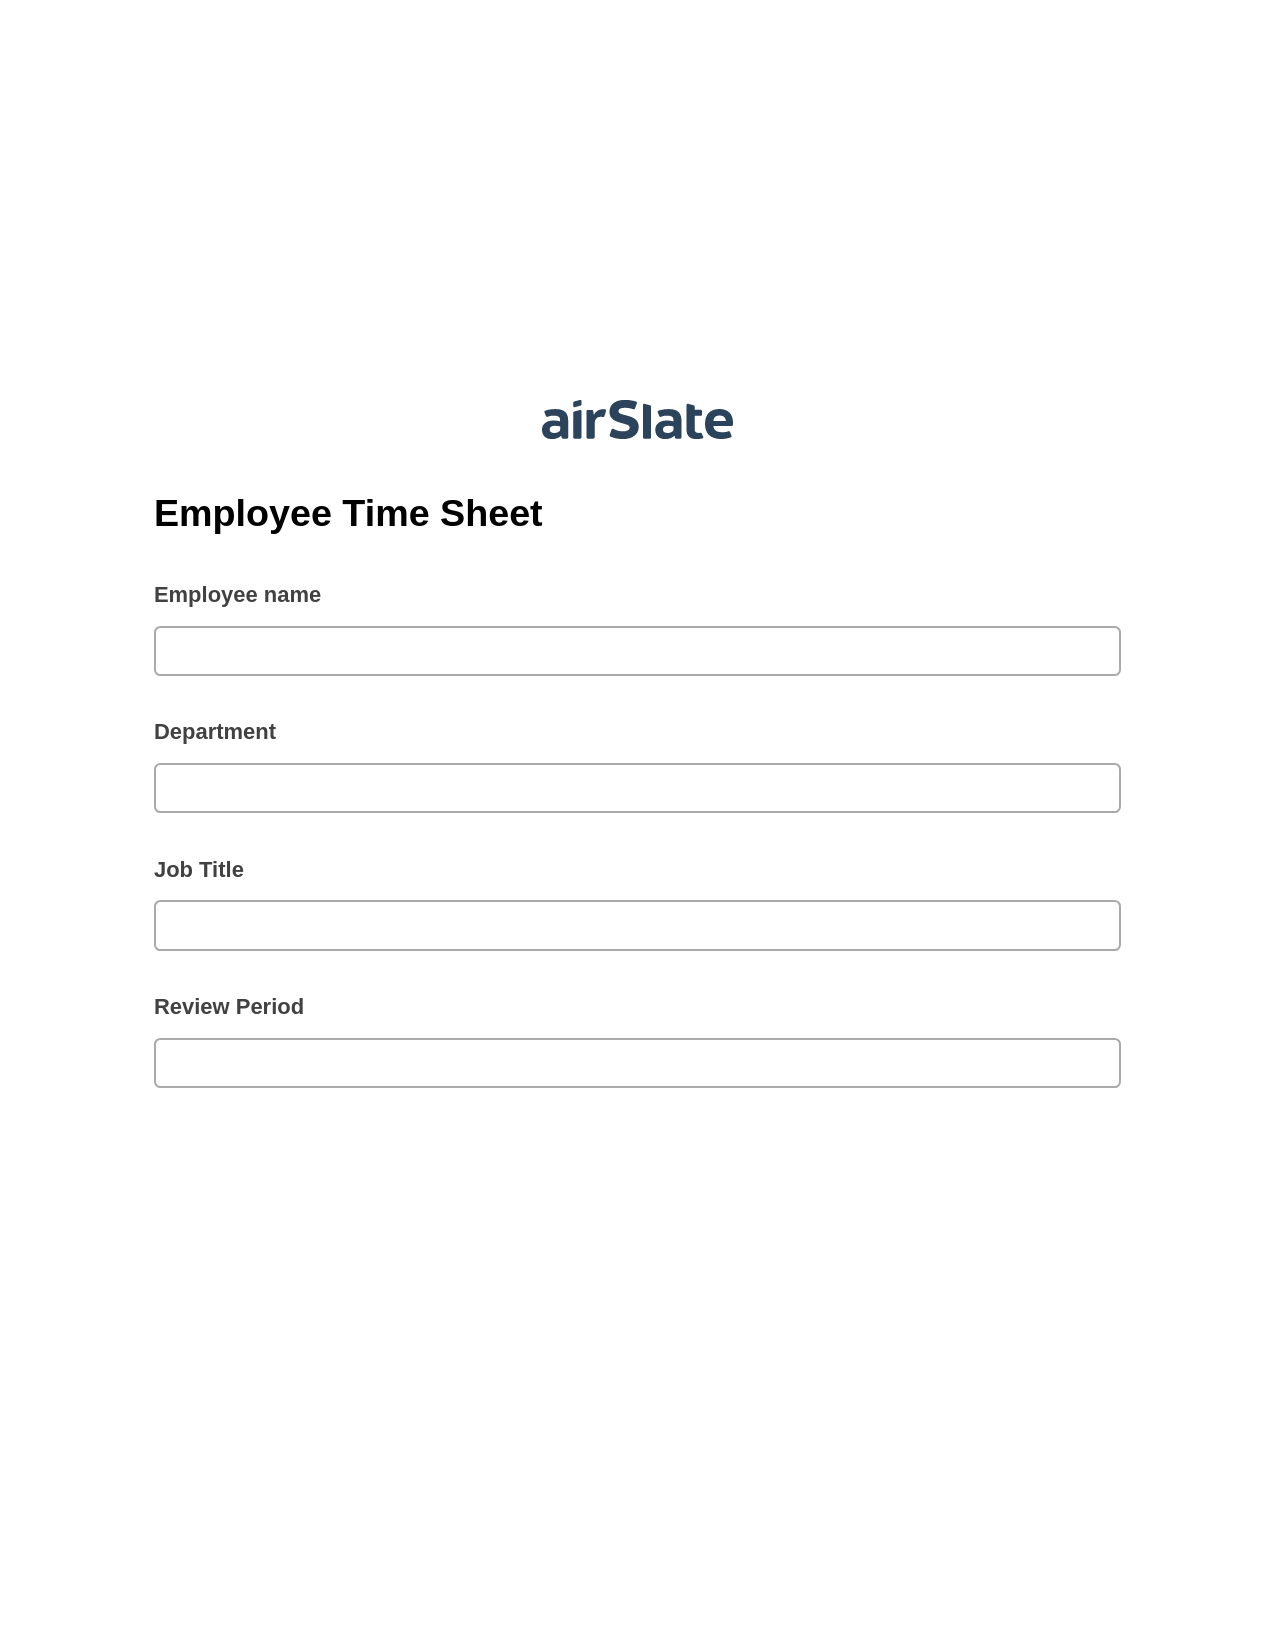 Multirole Employee Time Sheet Pre-fill from MySQL Bot, Create Salesforce Records Bot, Export to Smartsheet